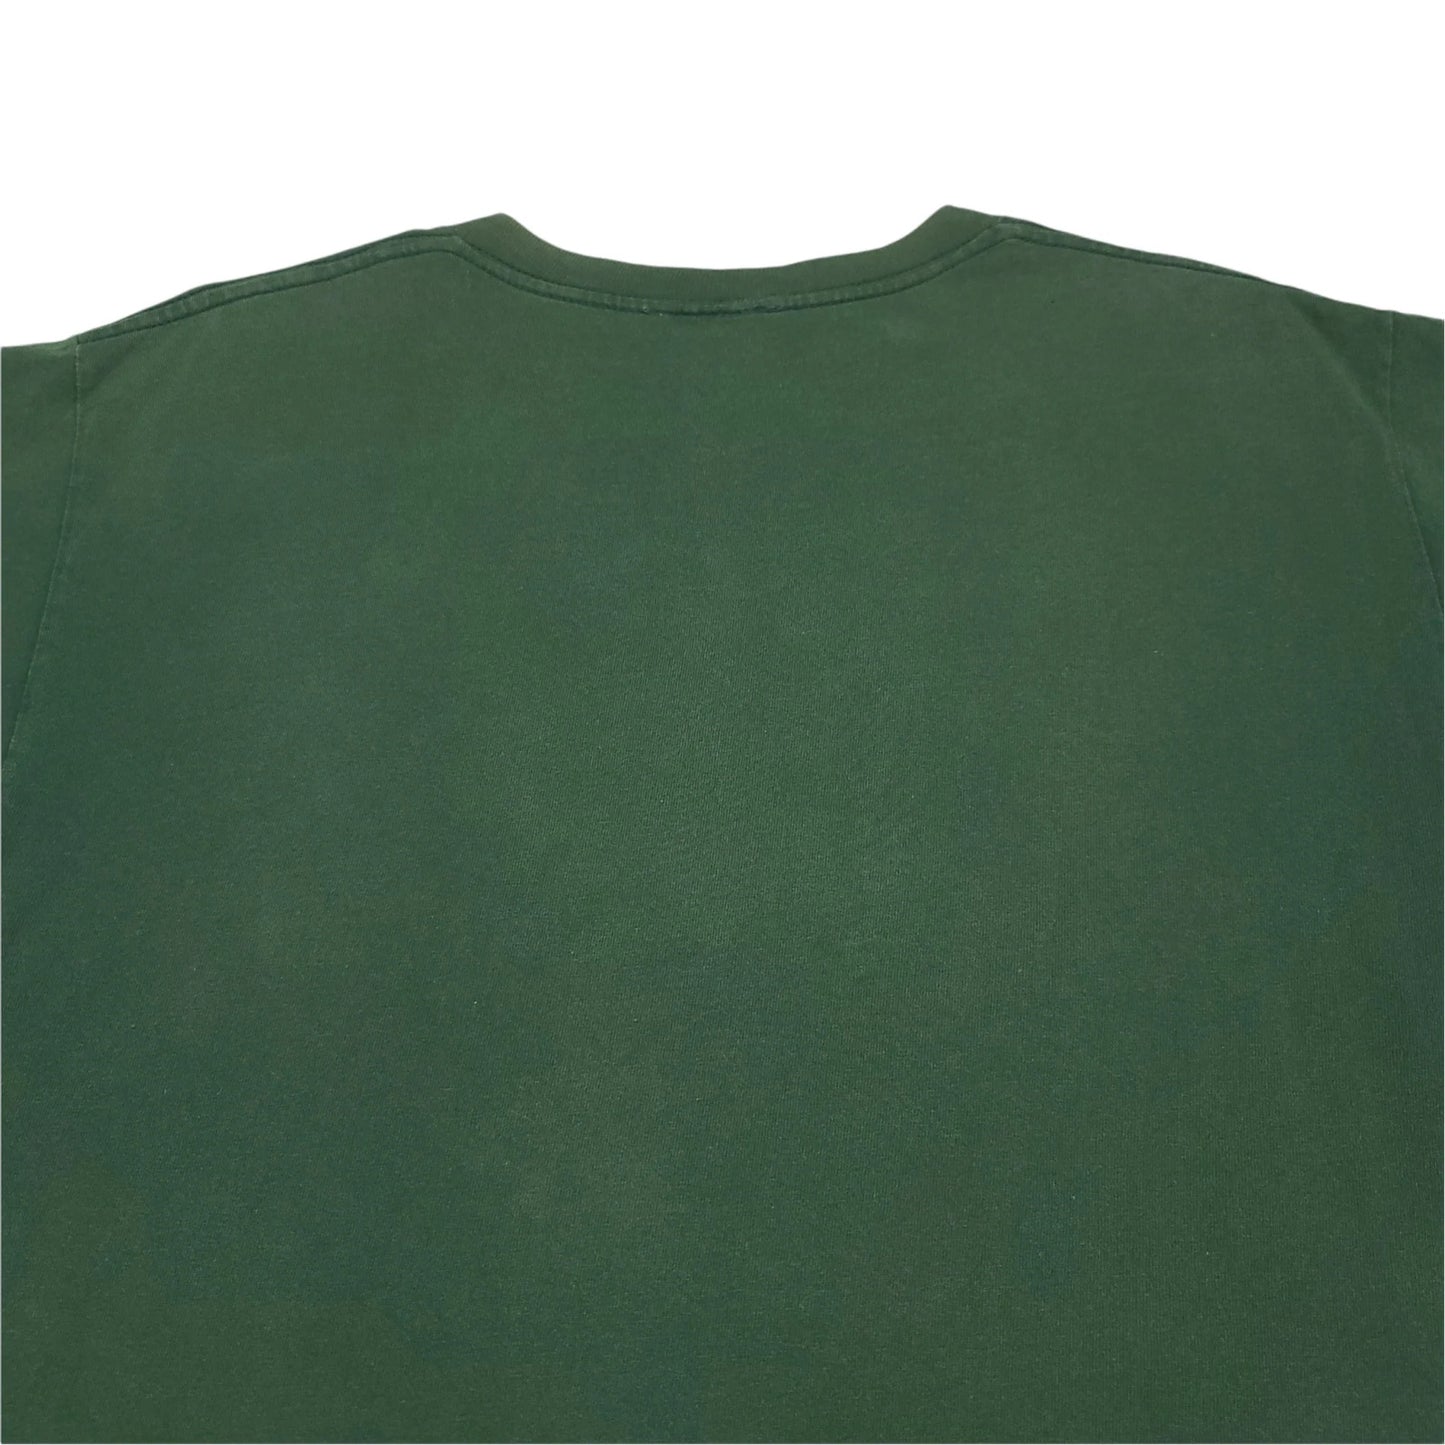 Shorty'S Black Magic Green Skate T-Shirt